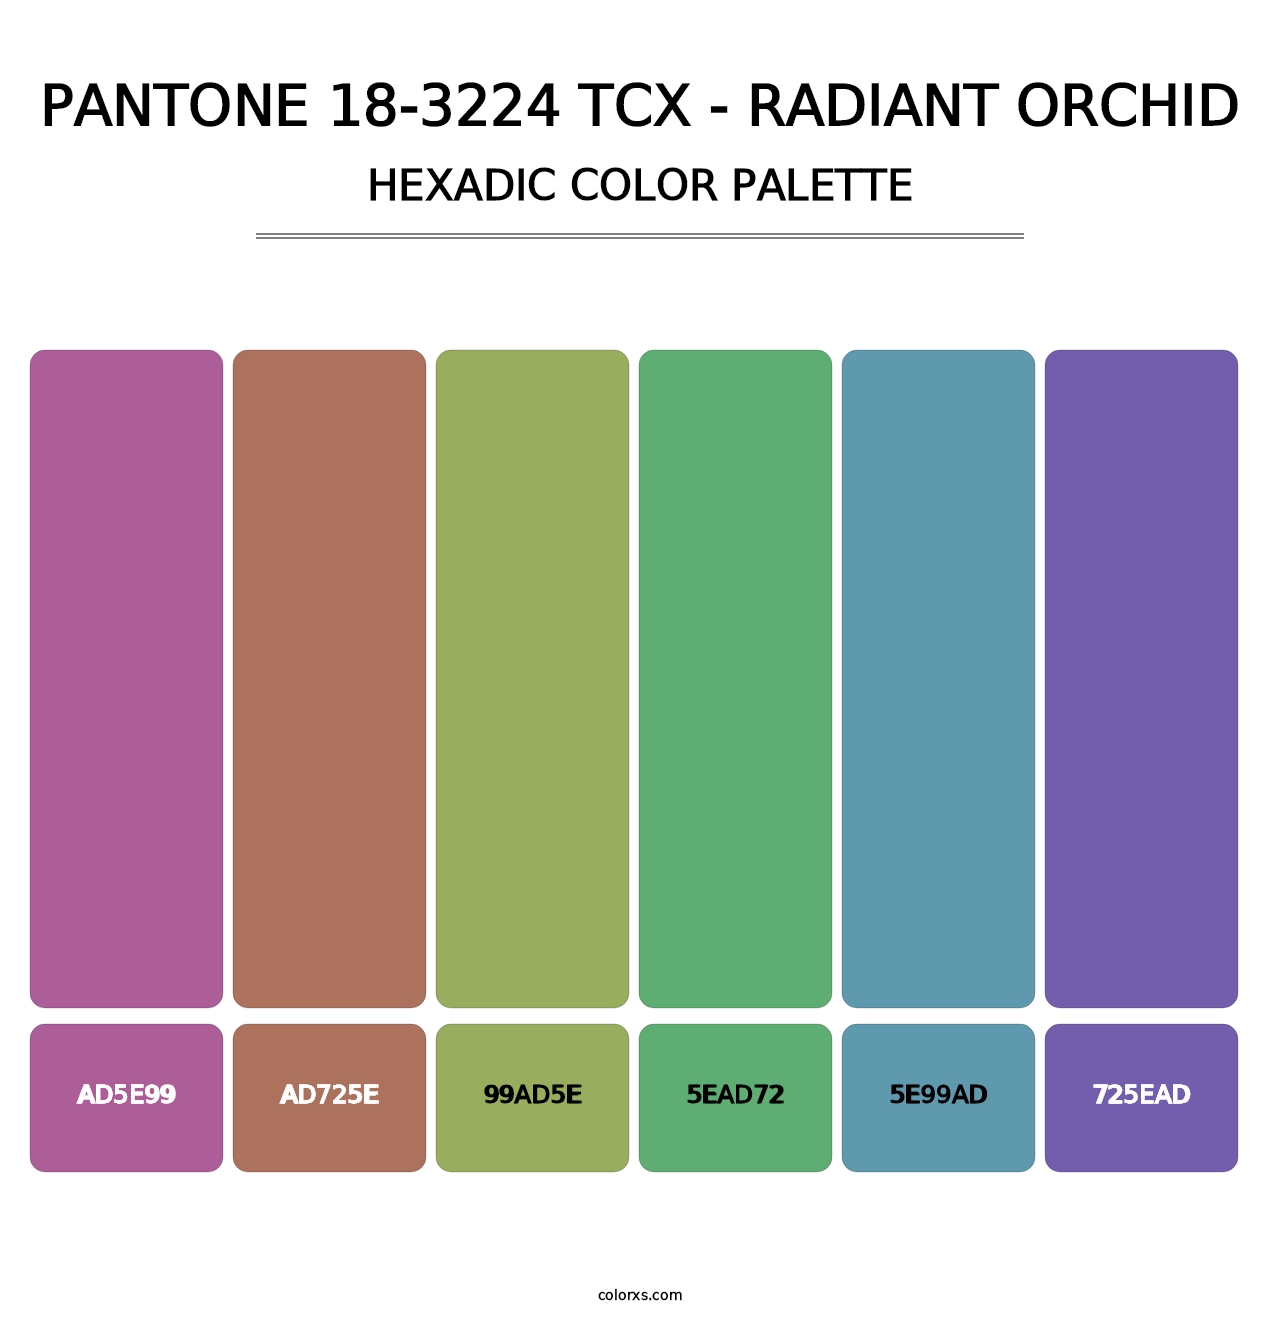 PANTONE 18-3224 TCX - Radiant Orchid - Hexadic Color Palette